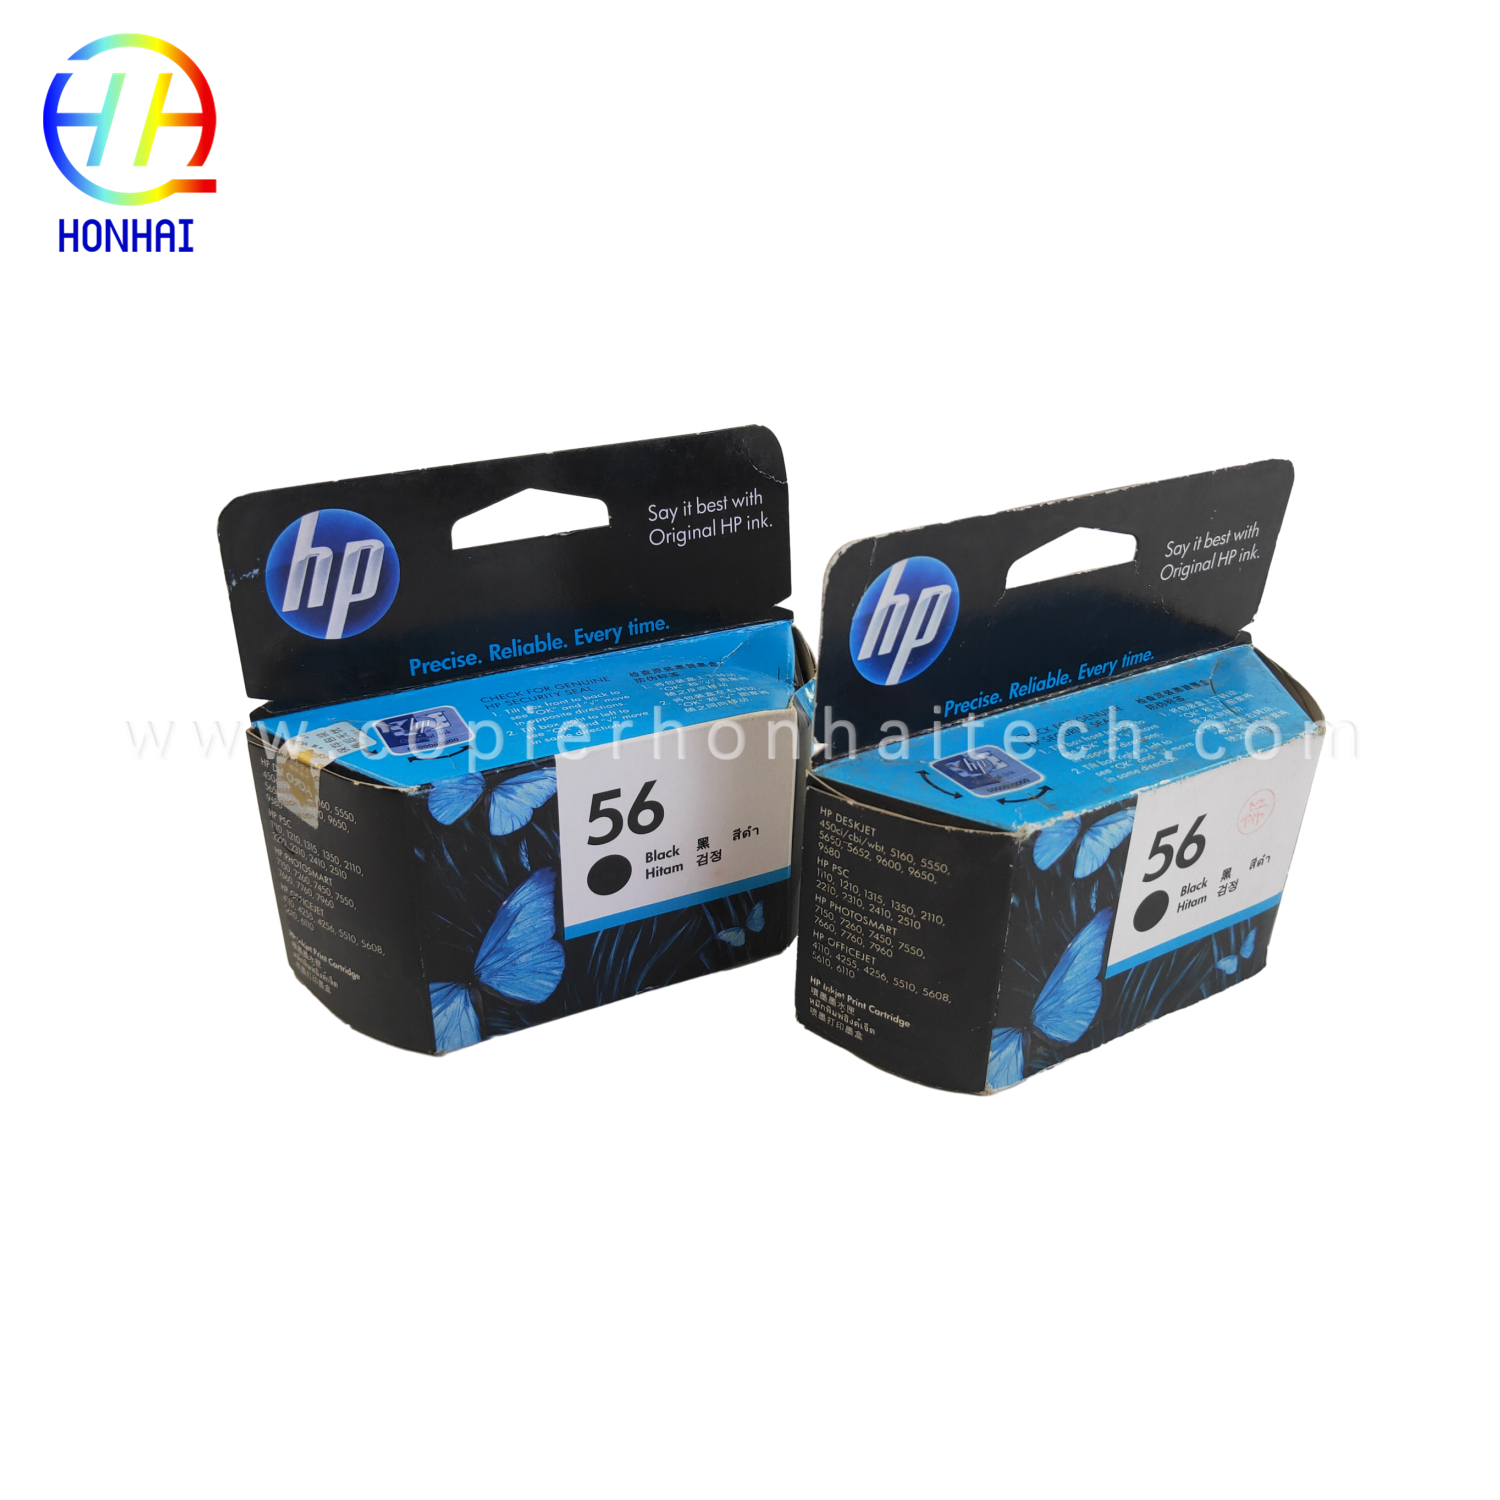 Original Black Printer Ink Cartridge 56 for HP Deskjet 5550 5551 5552